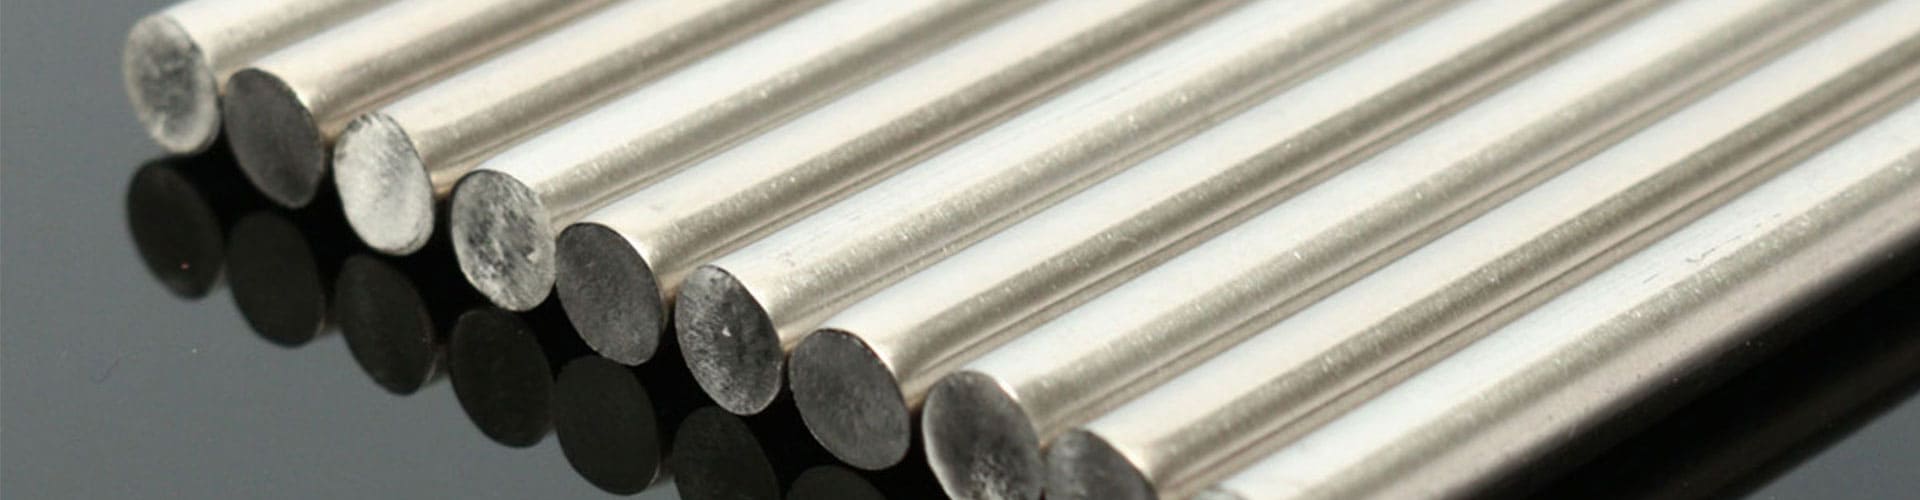 nickel-alloy-201-round-bars-rods-manufacturer-exporter-supplier-in-france